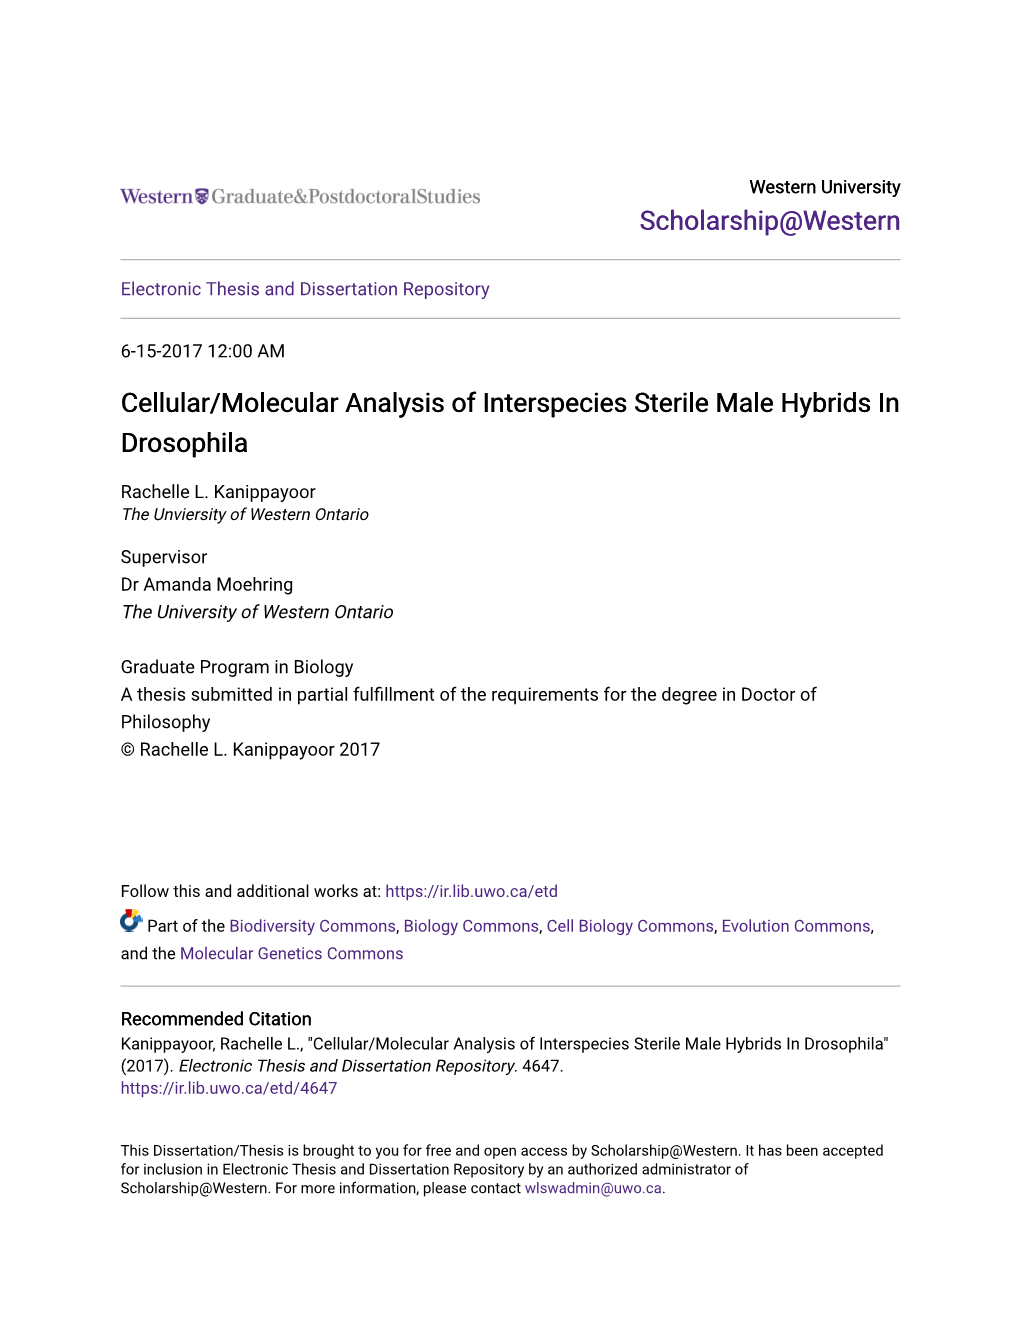 Cellular/Molecular Analysis of Interspecies Sterile Male Hybrids in Drosophila